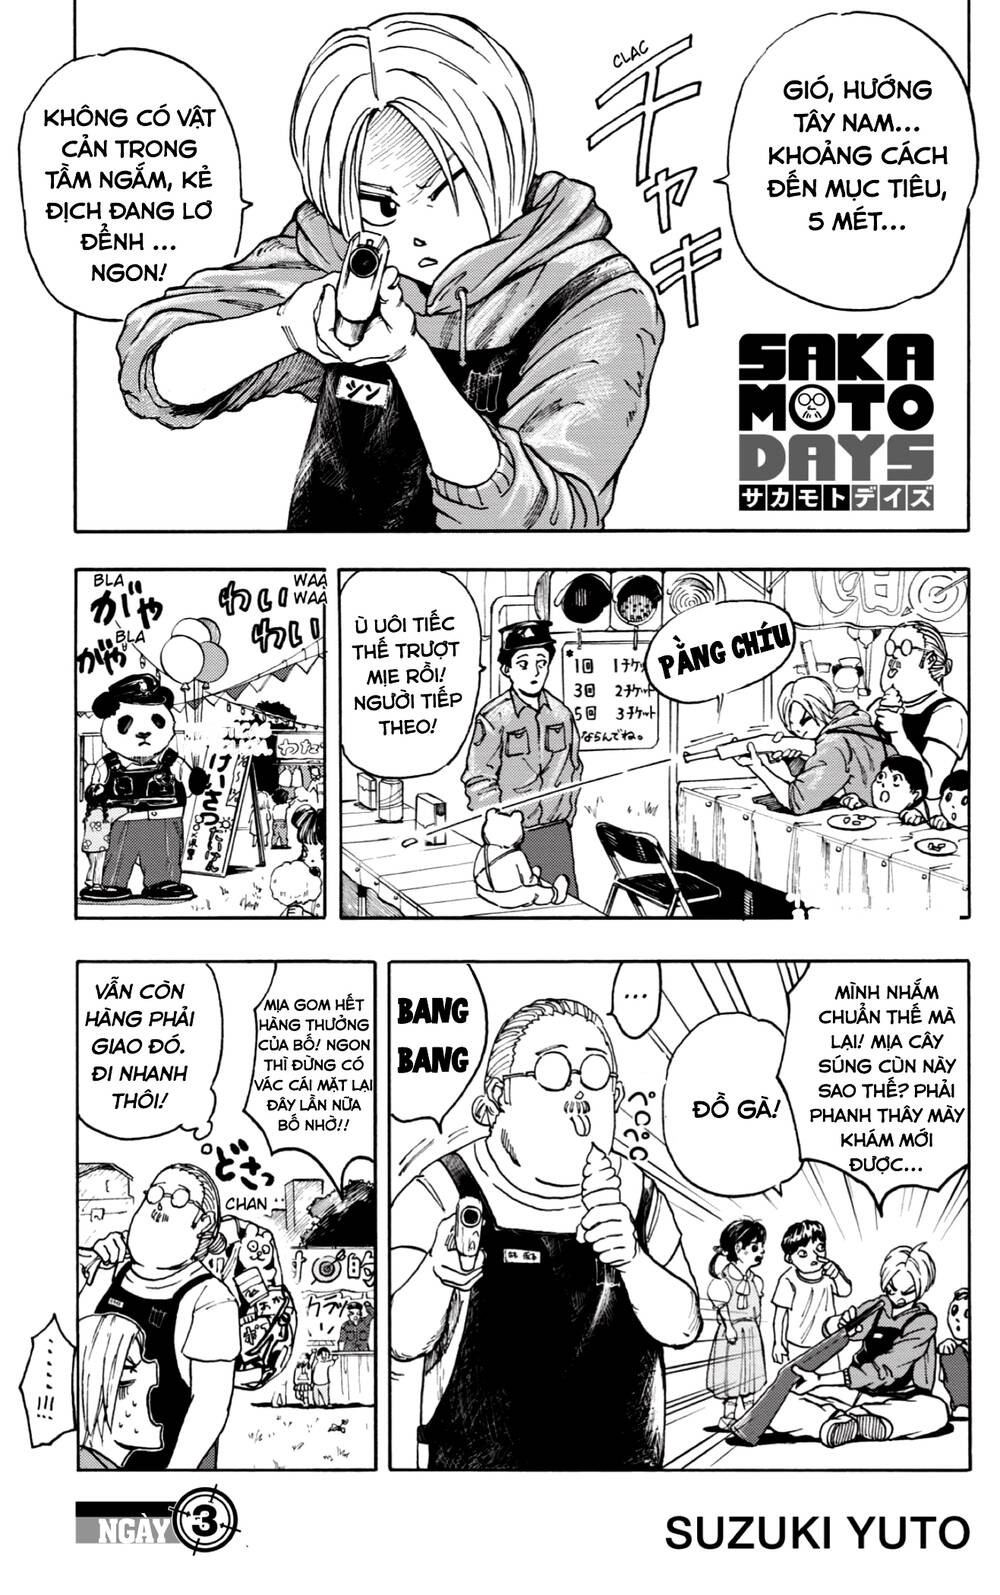 Sakamoto Days: Chương 3